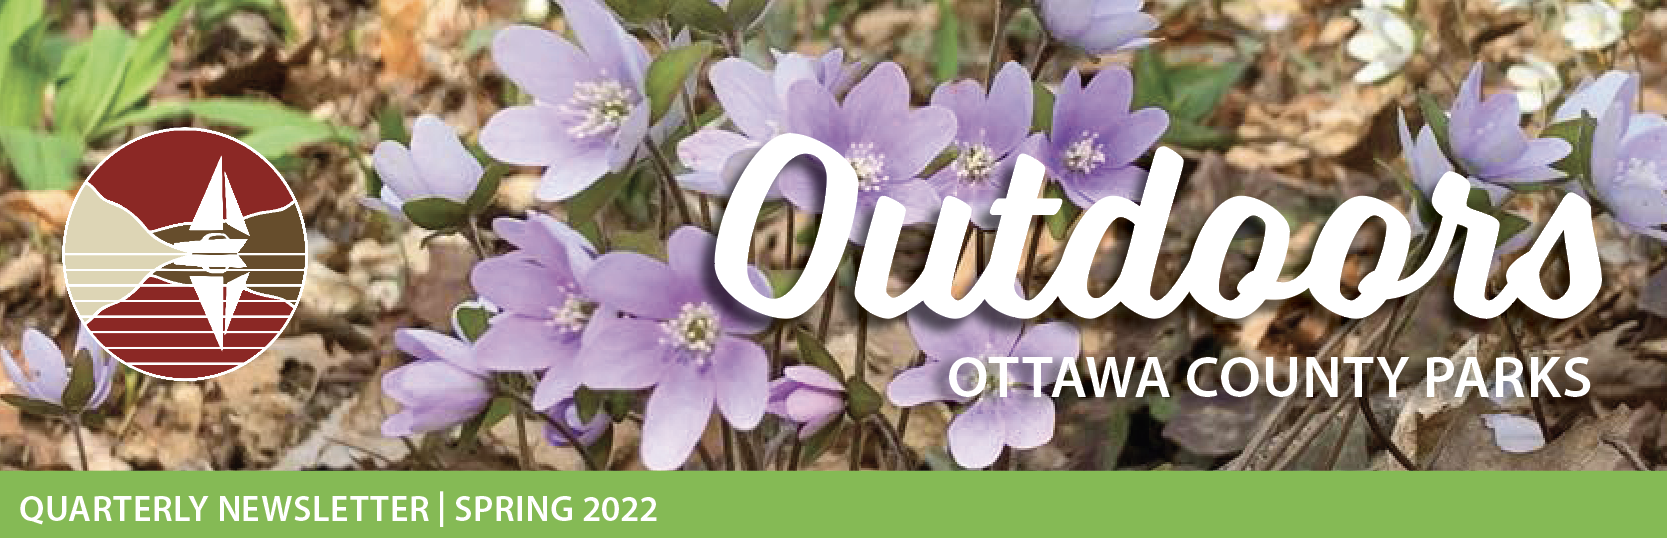 Outdoors Ottawa County Banner